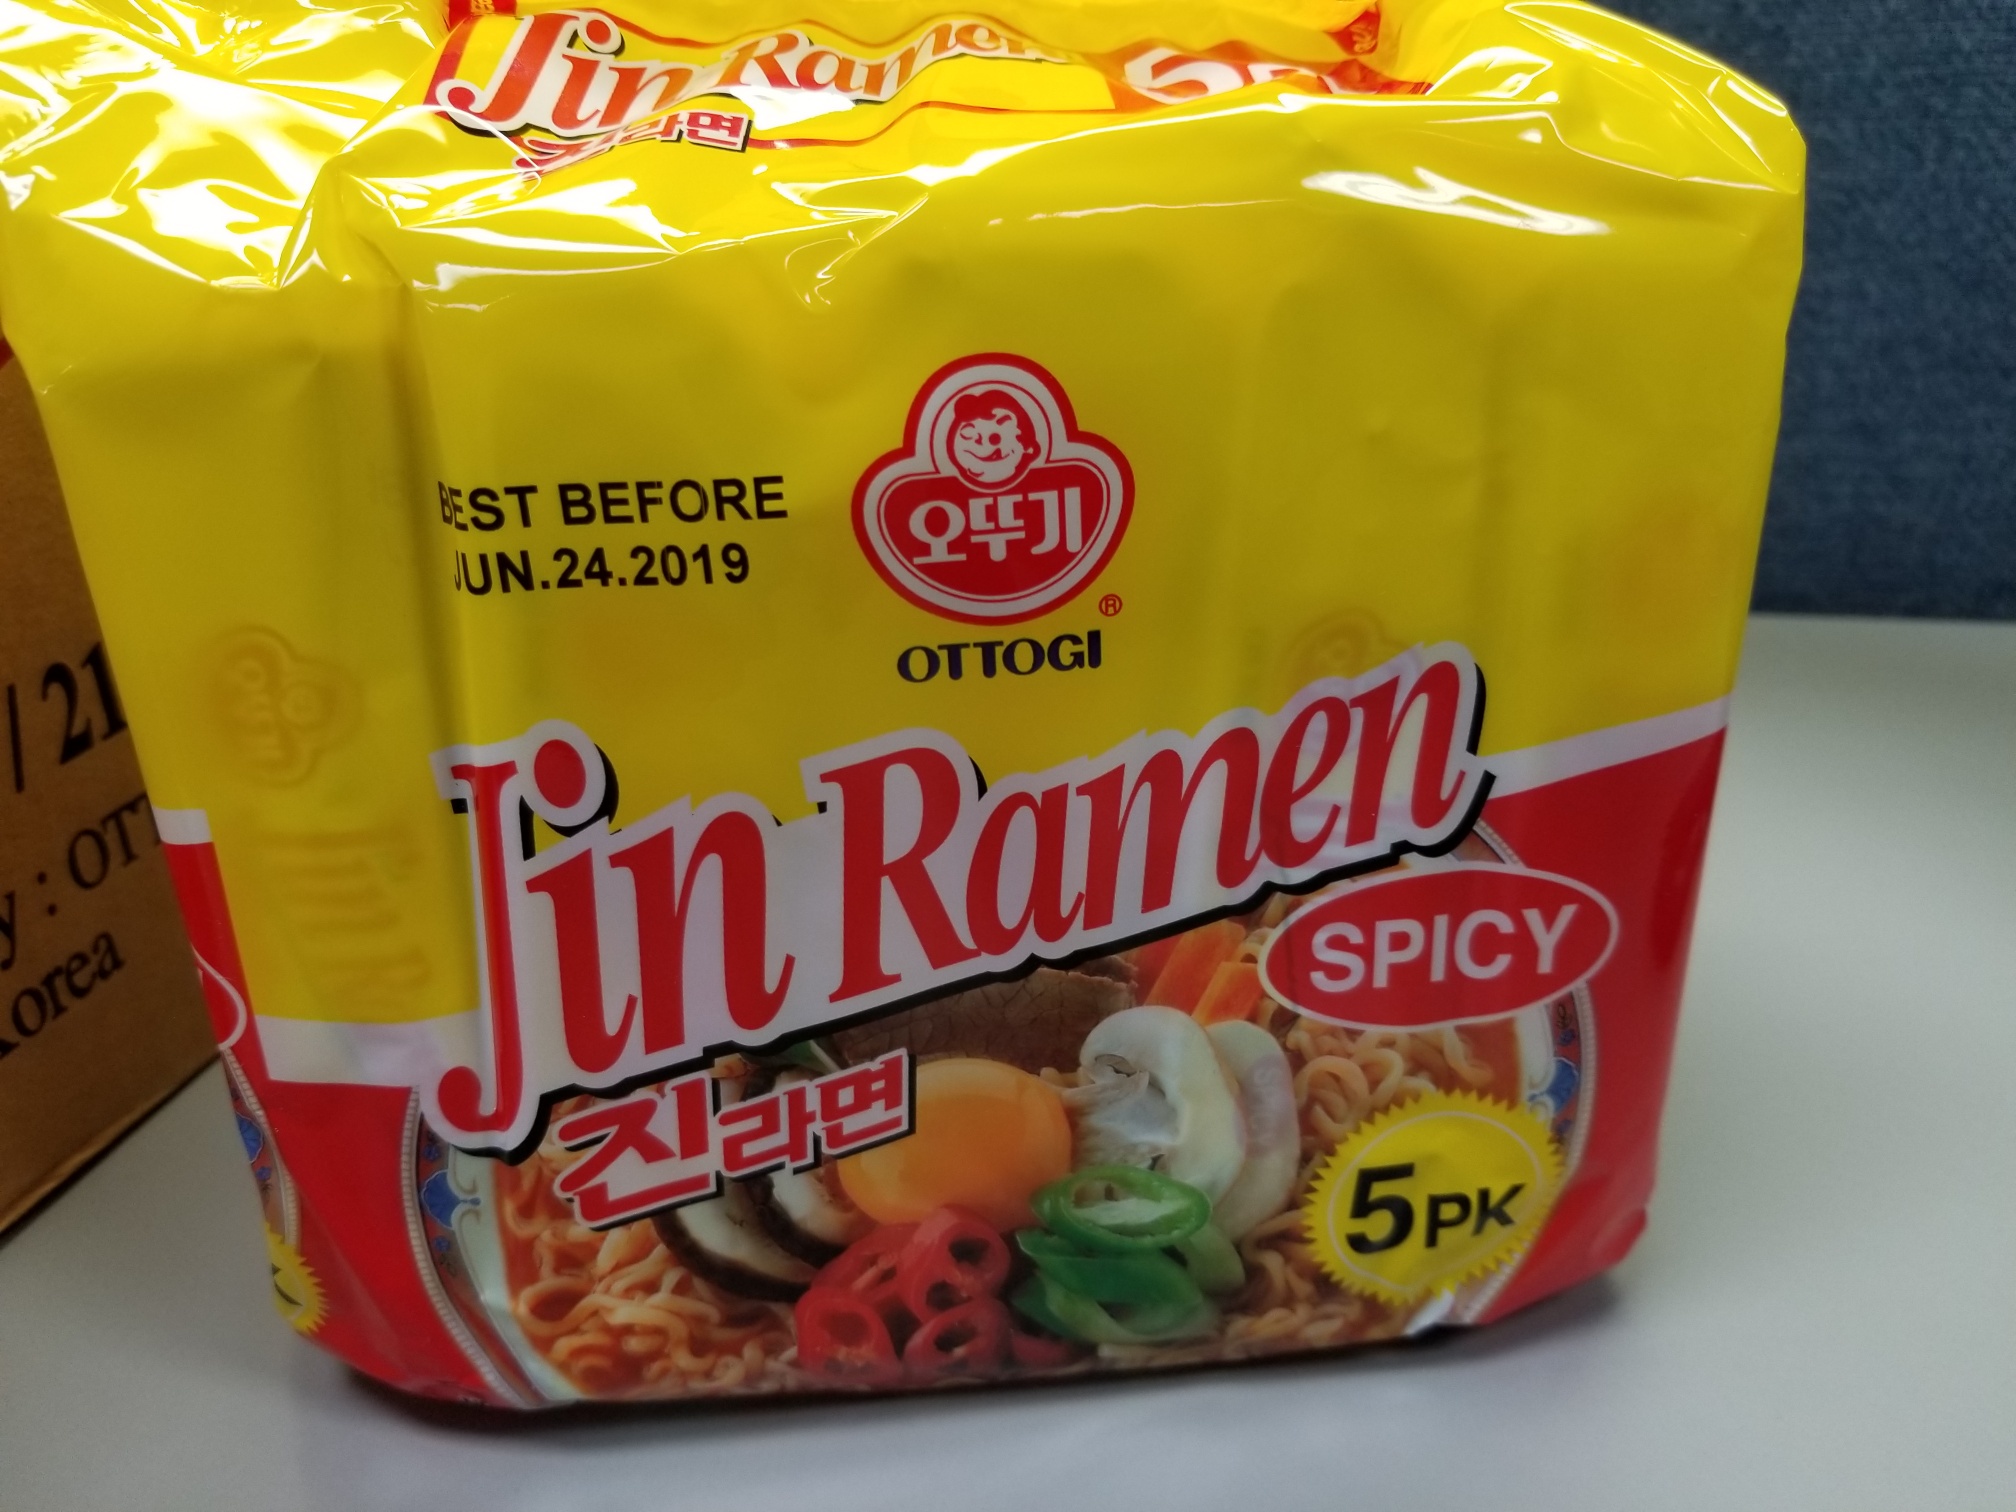 Ottogi brand Jin Ramen Spicy, 600 g - outer front